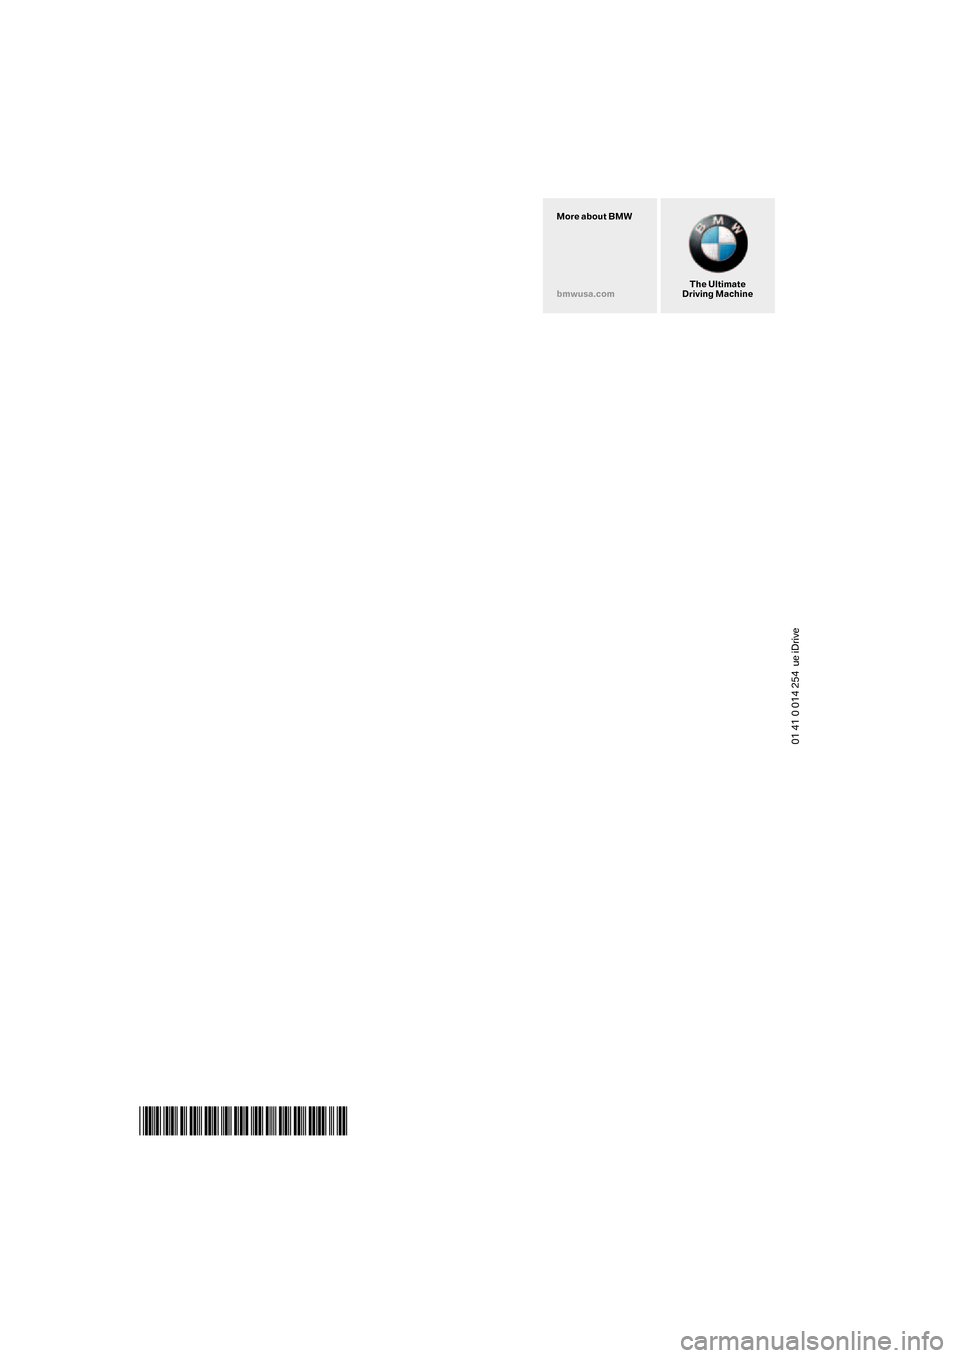 BMW 328I SEDAN 2008 E90 Owners Manual 01 41 0 014 254  ue iDrive
*BL001425400C*
The Ultimate
Driving Machine More about BMW
bmwusa.com 